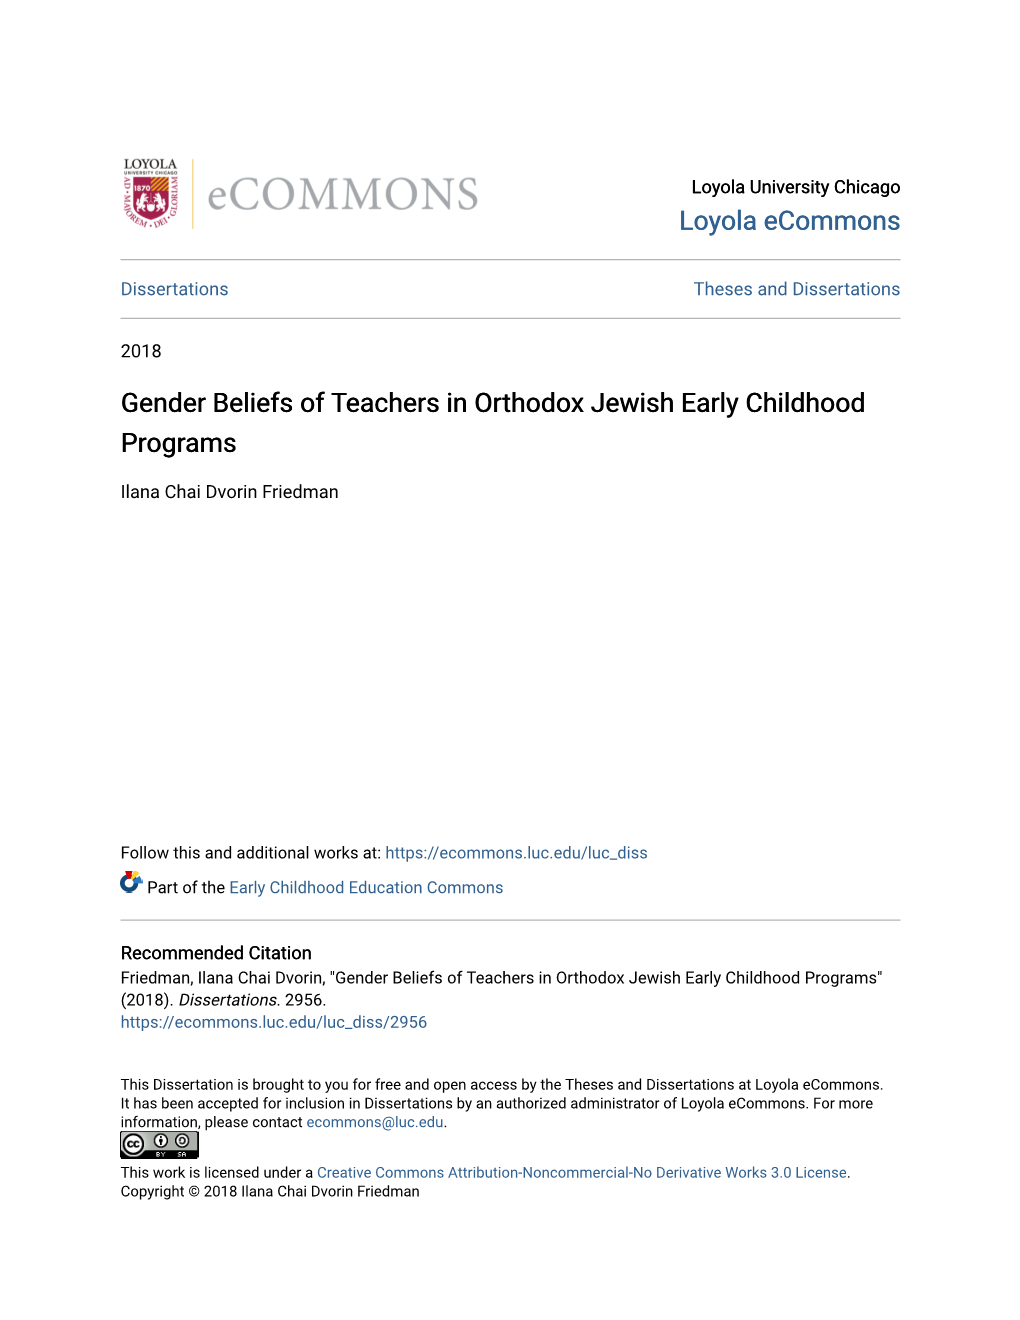 Gender Beliefs of Teachers in Orthodox Jewish Early Childhood Programs